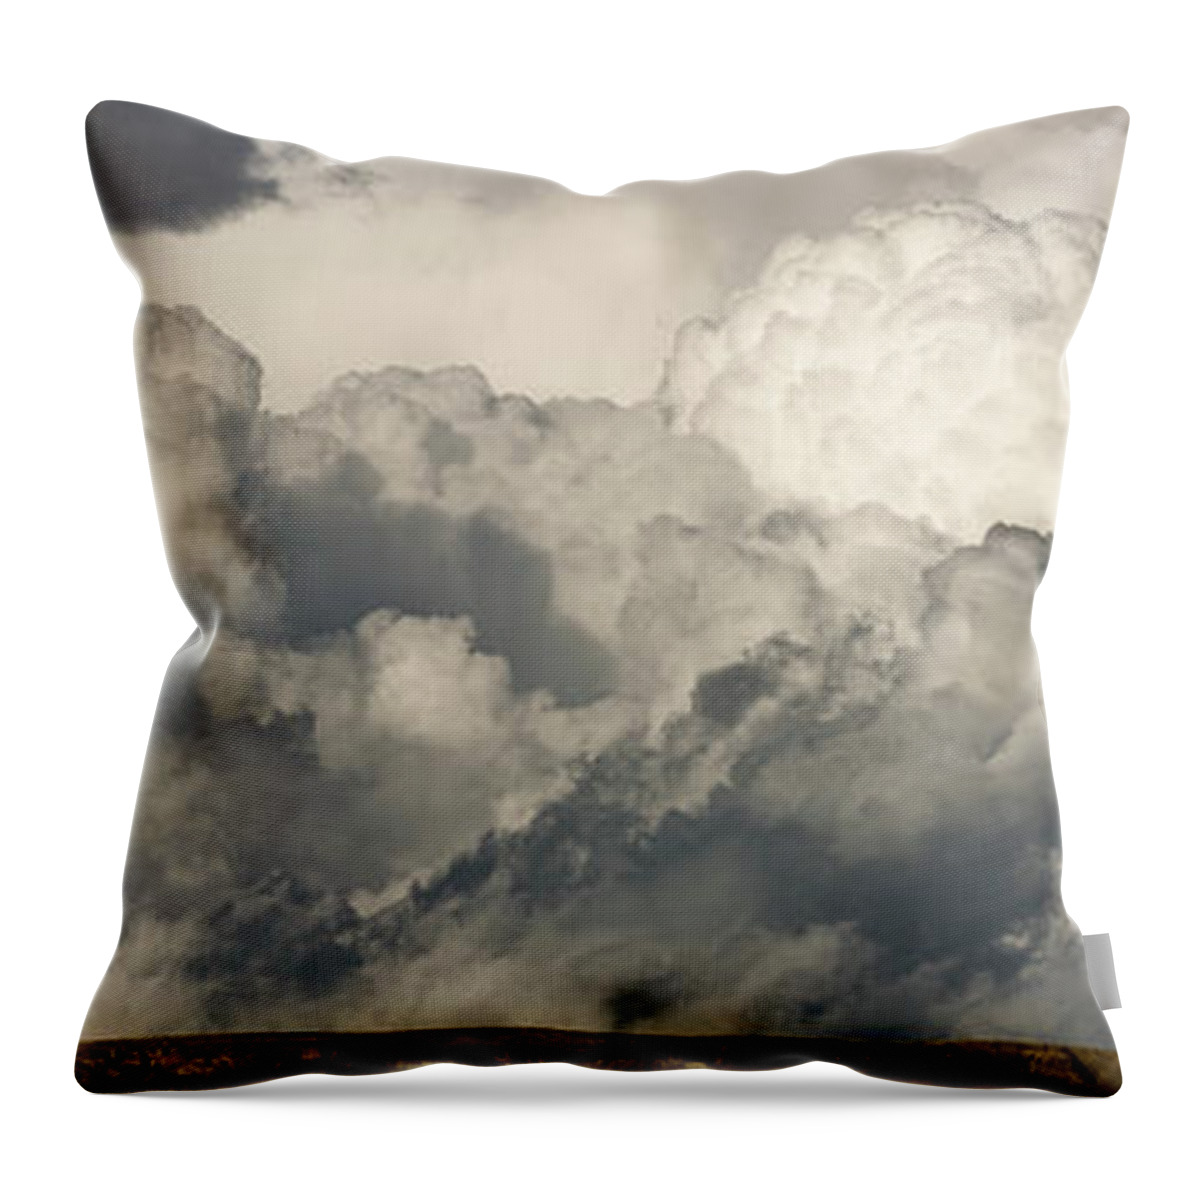 00431112 Throw Pillow featuring the photograph Storm And Sagebrush Desert by Yva Momatiuk John Eastcott